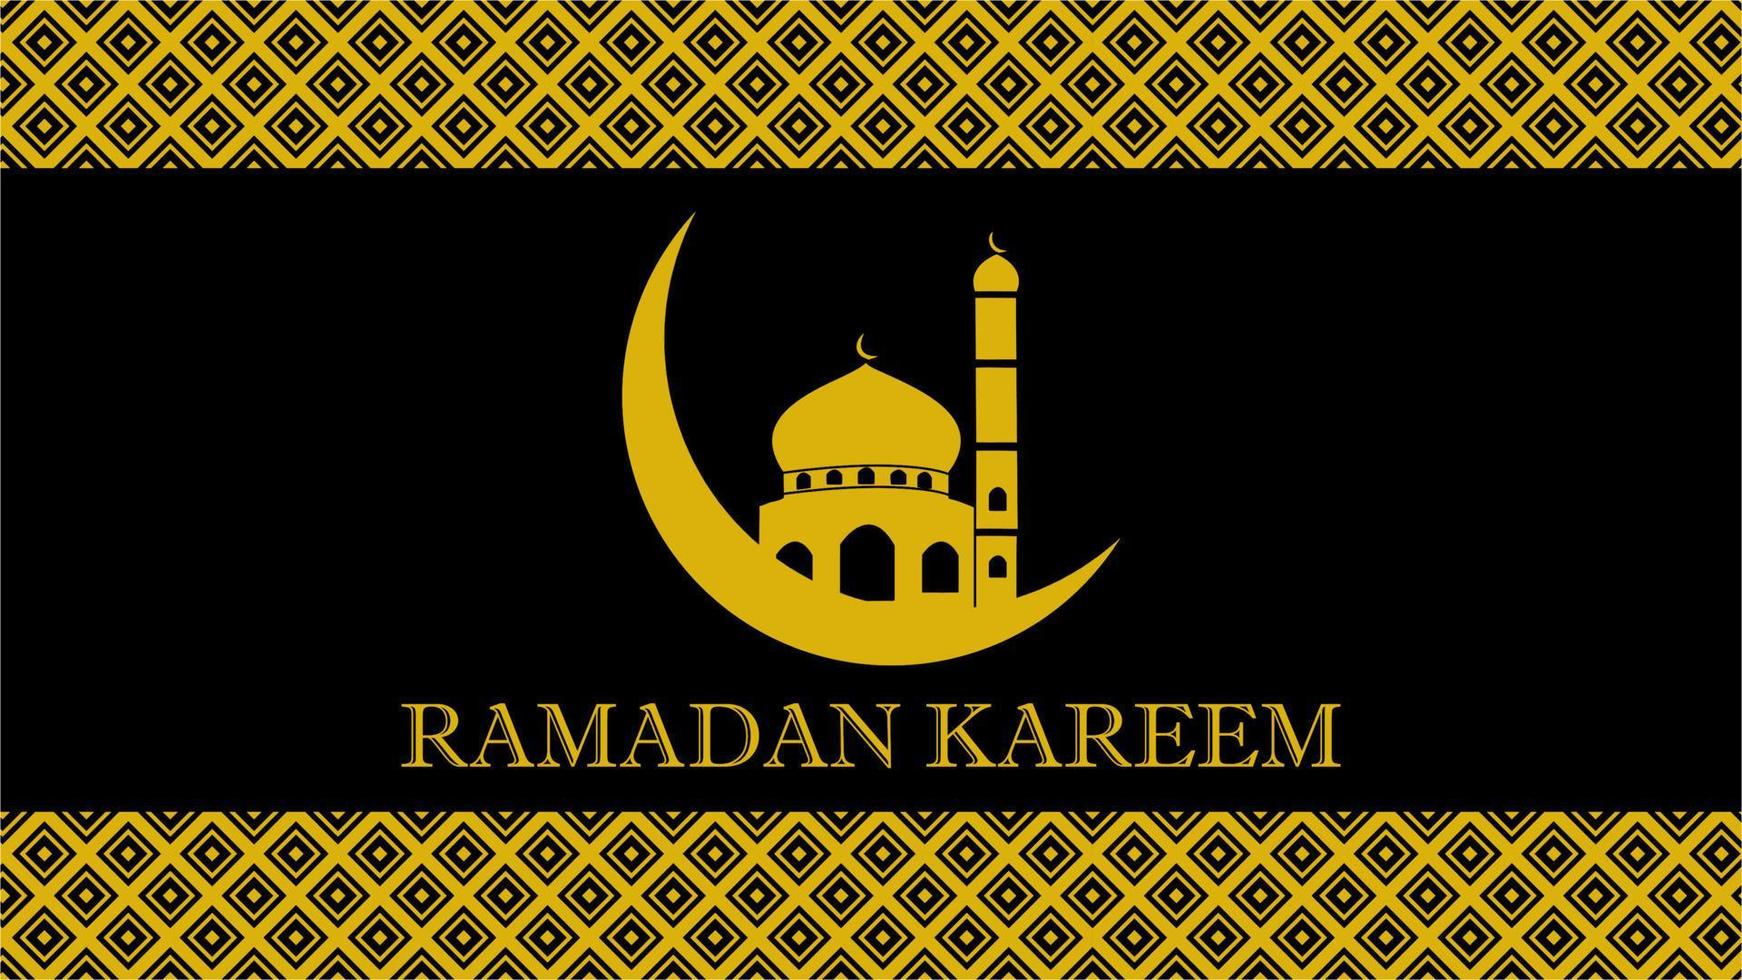 Ramadan kareem sfondo con moschea icona giallo nero vettore illustrazione. Islam santo mese Ramadan kareem sfondo